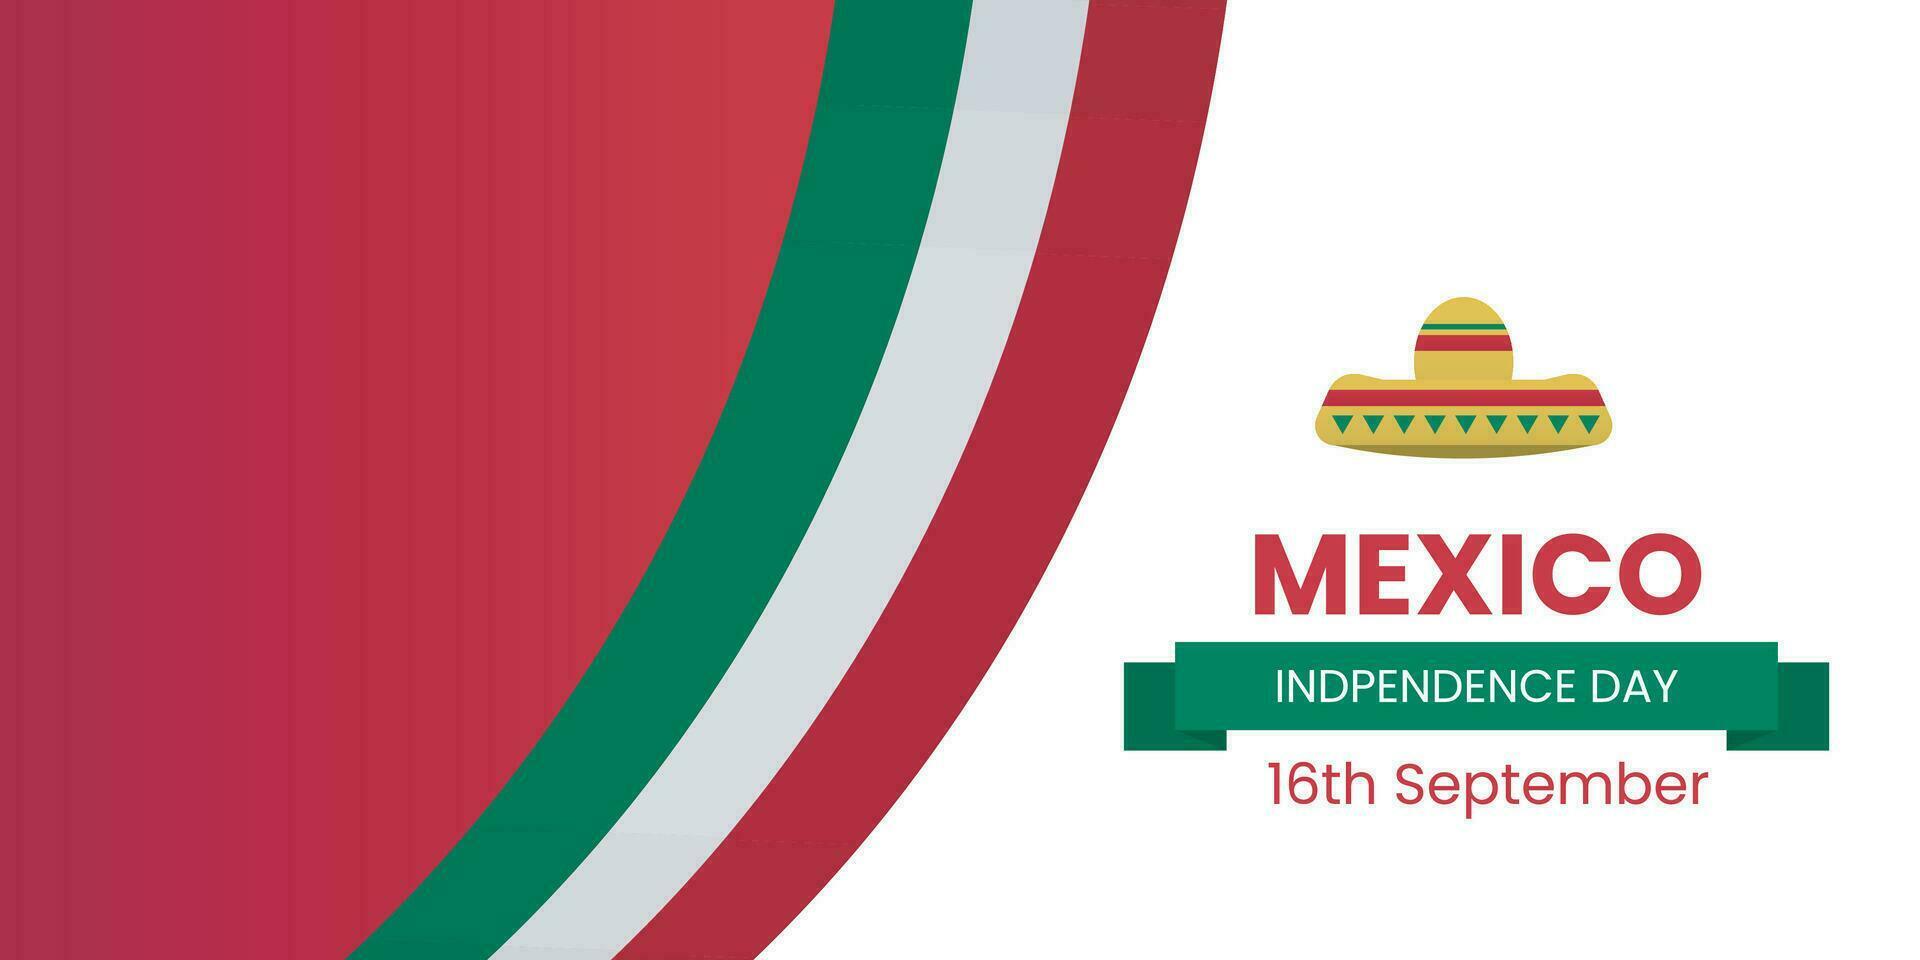 mexico independencia día bandera o enviar modelo con banderas contento independencia día mexico 16 septiembre. vector